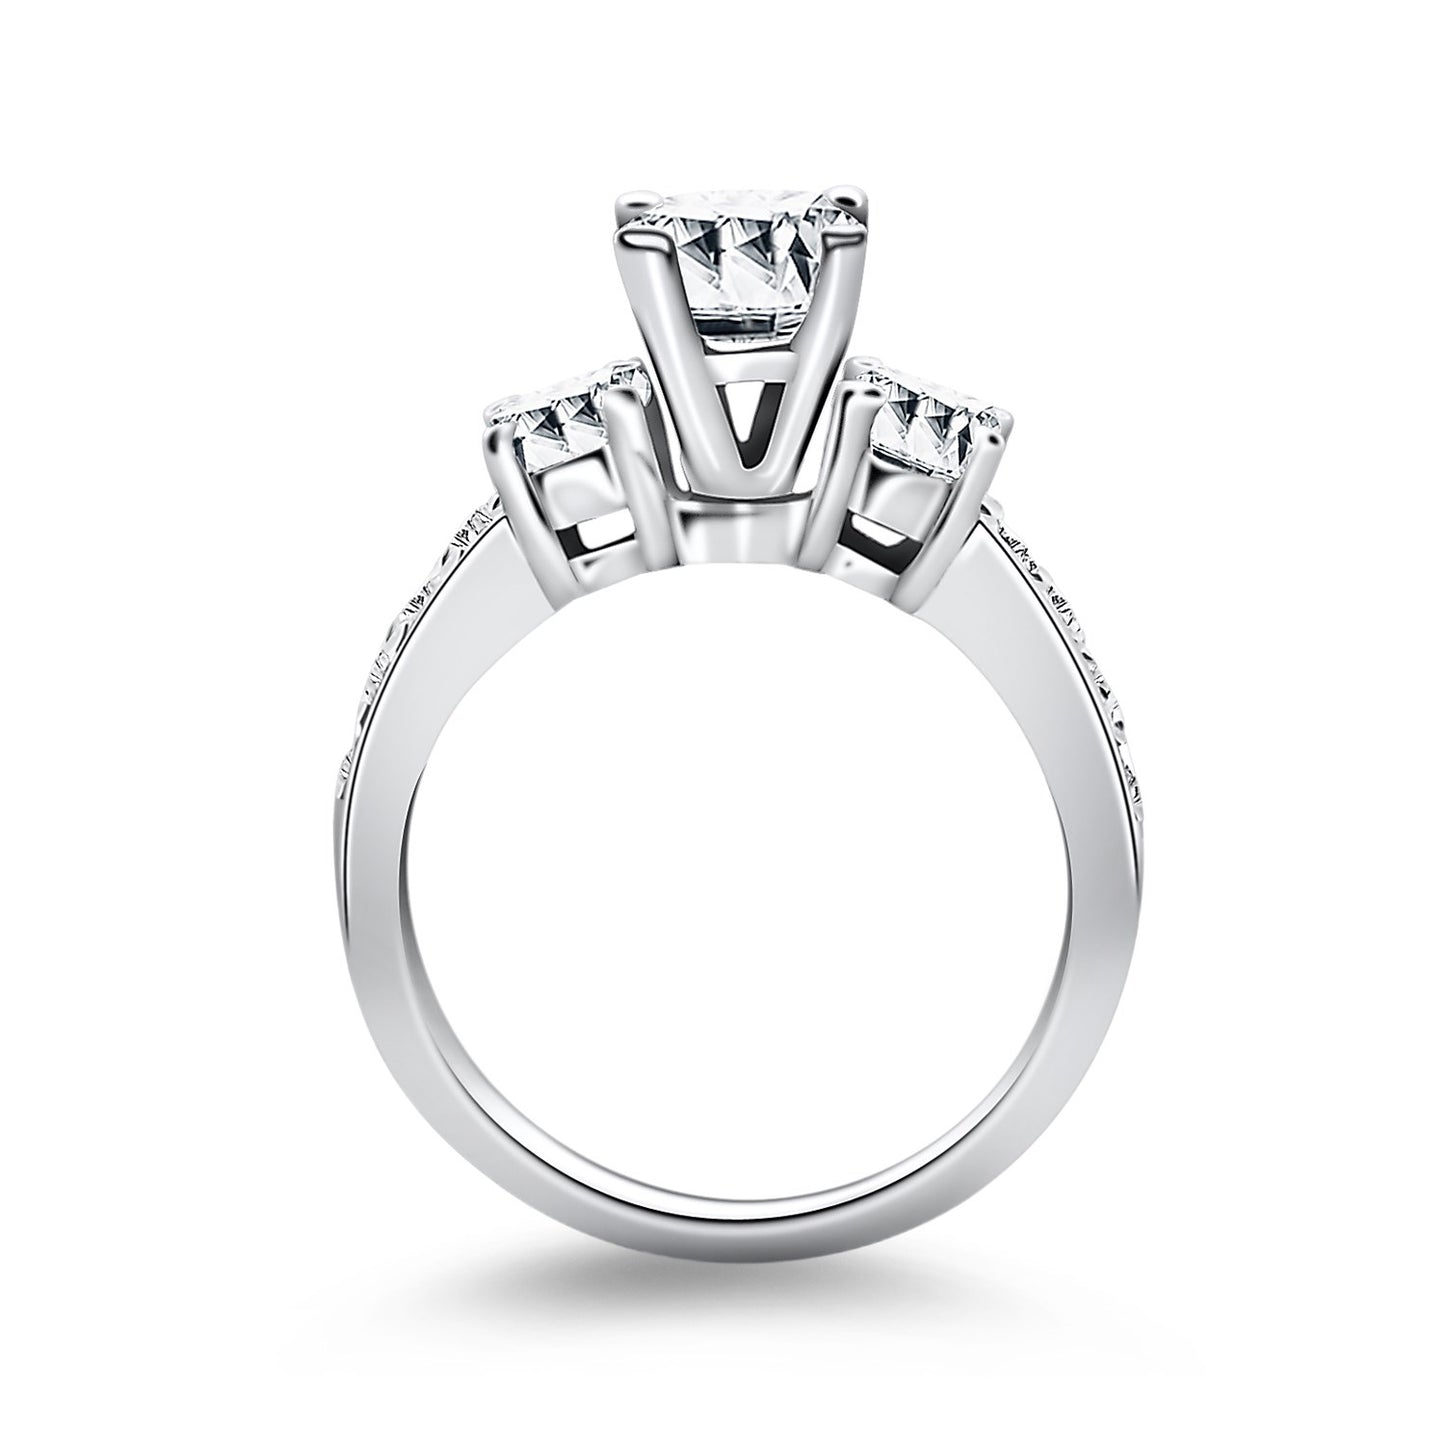 14k White Gold Three Stone Engagement Ring with Diamond Band